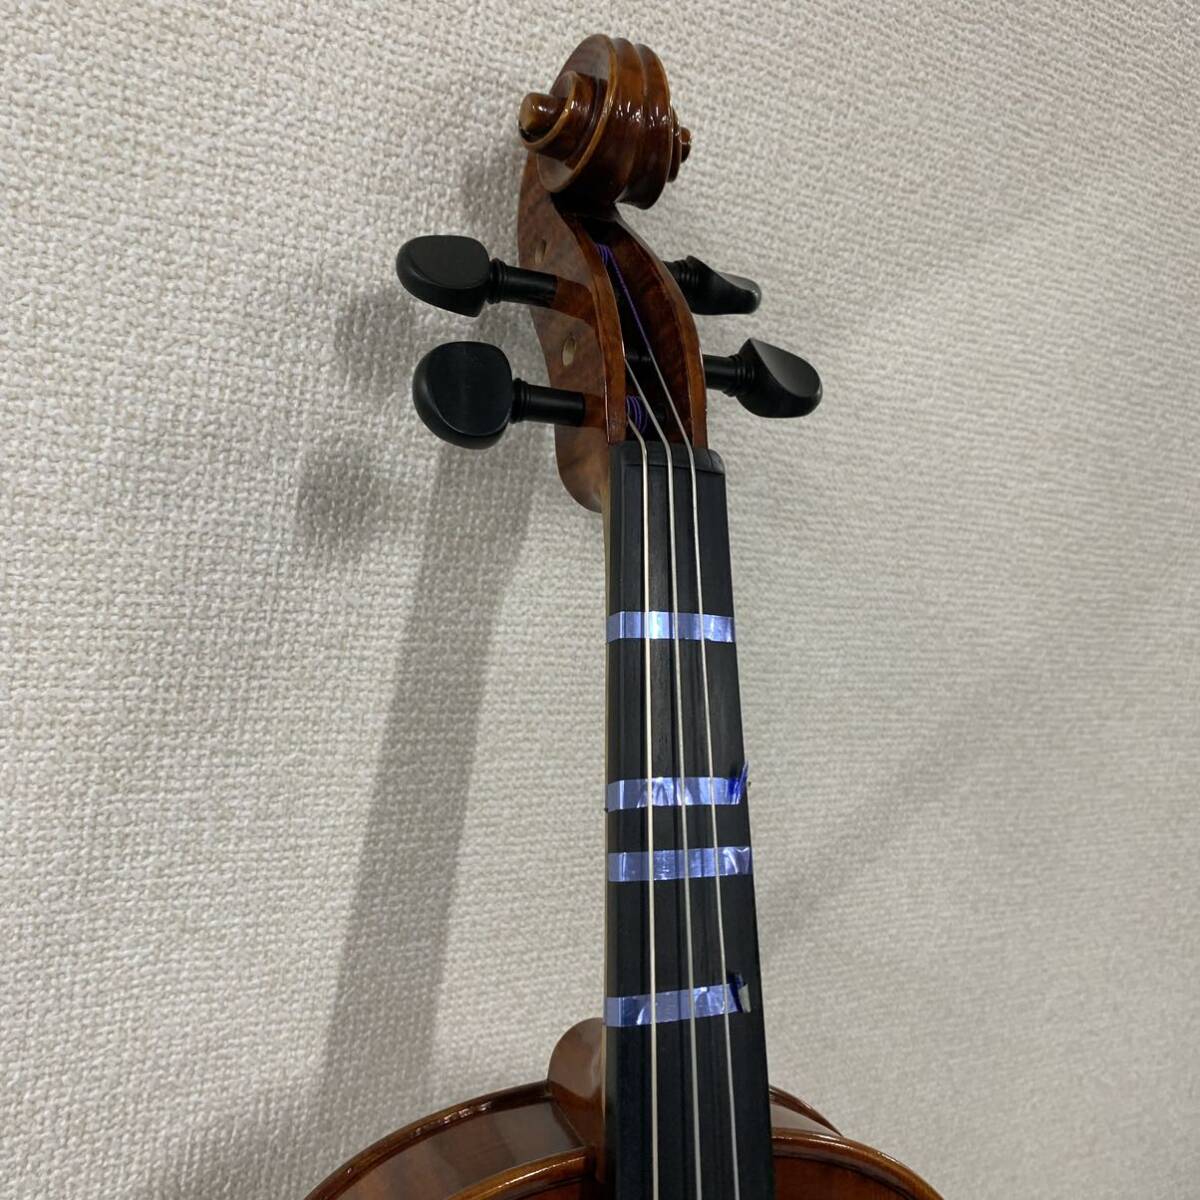 【P-4】 Suzuki No.500 バイオリン 付属品付 弦切れ 痕跡あり ステッカー貼られ スズキ 中古品 1865-156_画像2